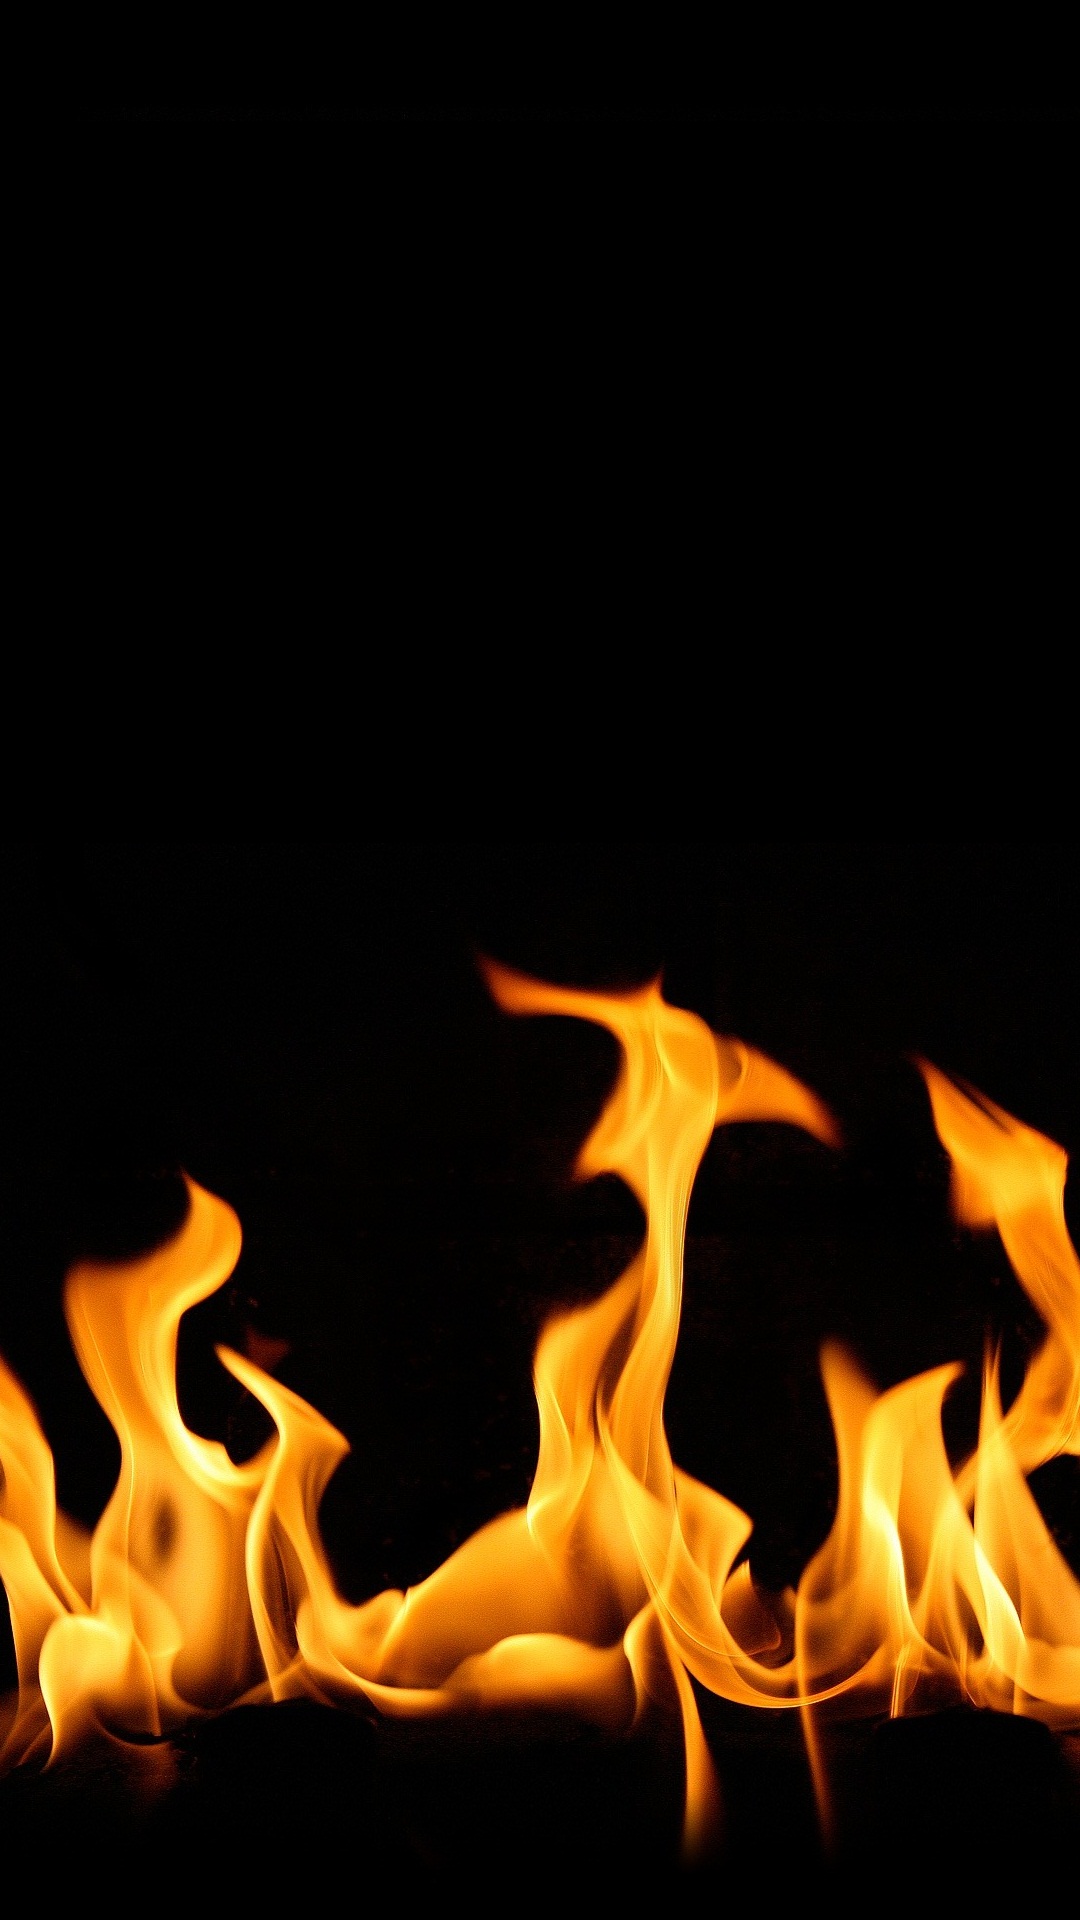 Fire Flame iPhone Wallpaper resolution 1080x1920